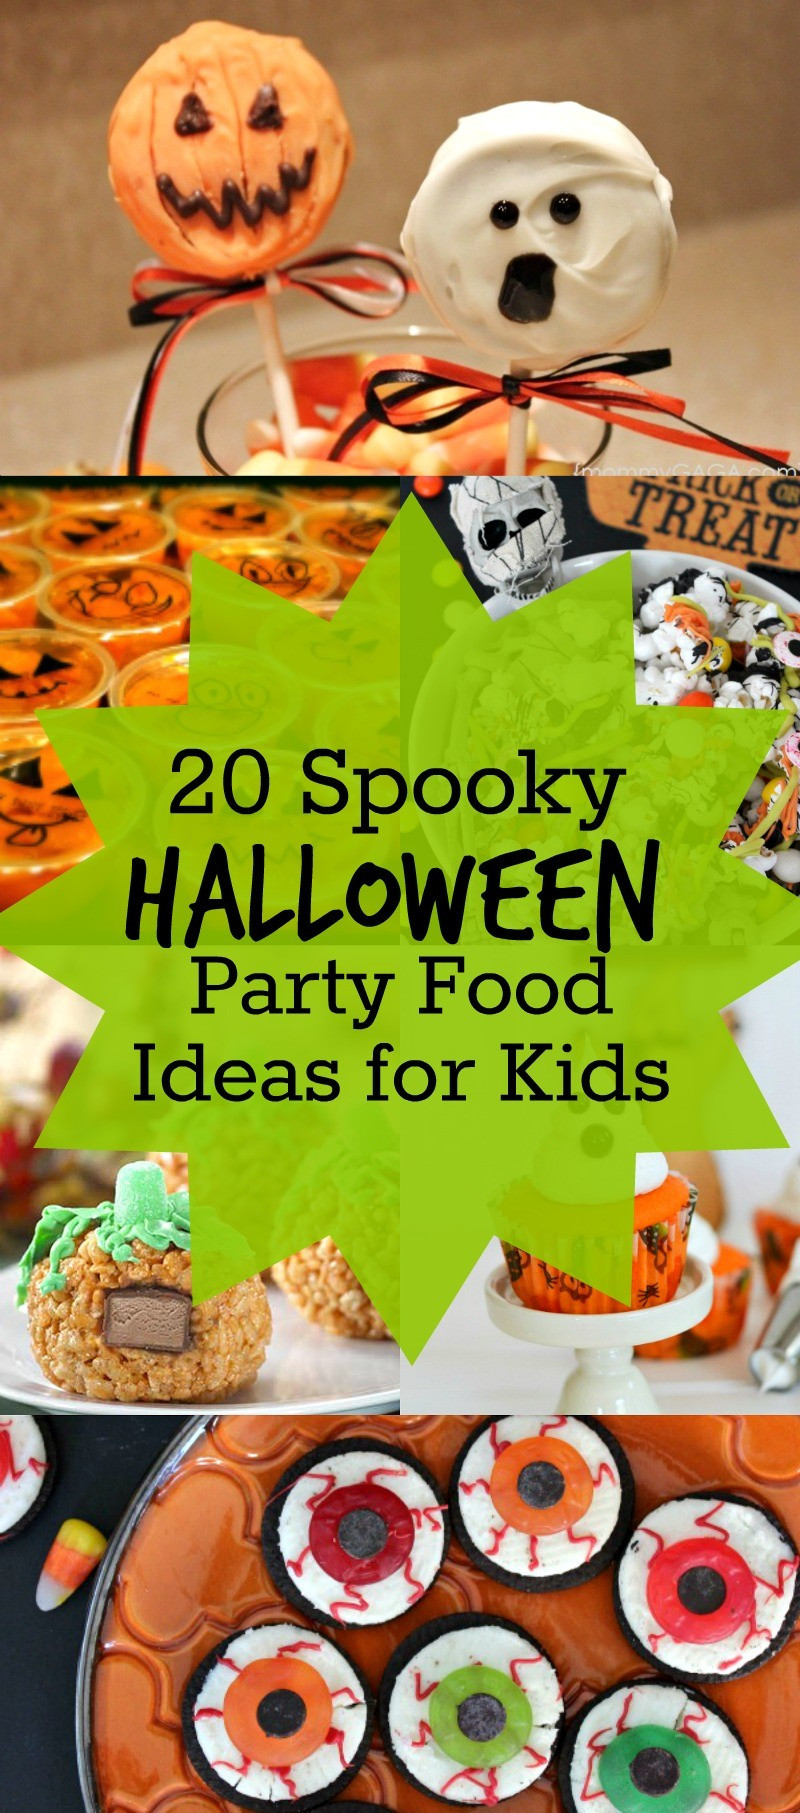 Spooky Party Food Ideas For Halloween
 20 Spooky Halloween Party Food Ideas for Kids Such cute